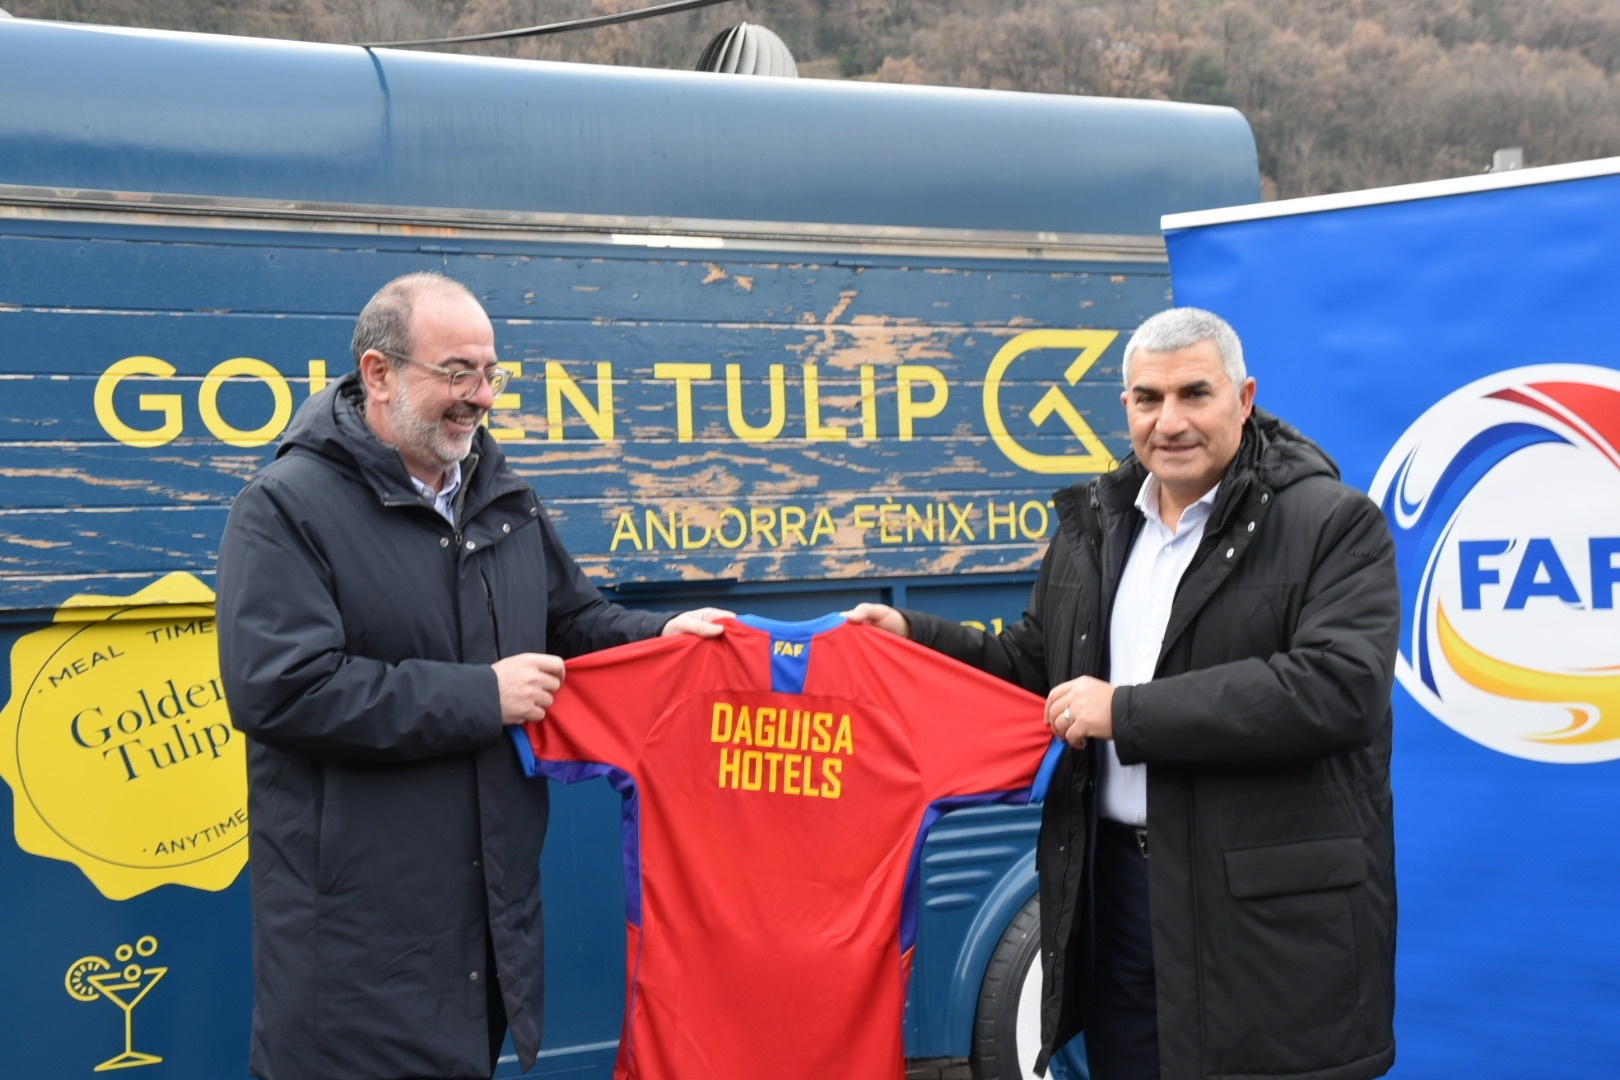 Daguisa Hotels esdevé nou patrocinador oficial  de la Federació Andorrana de Futbol